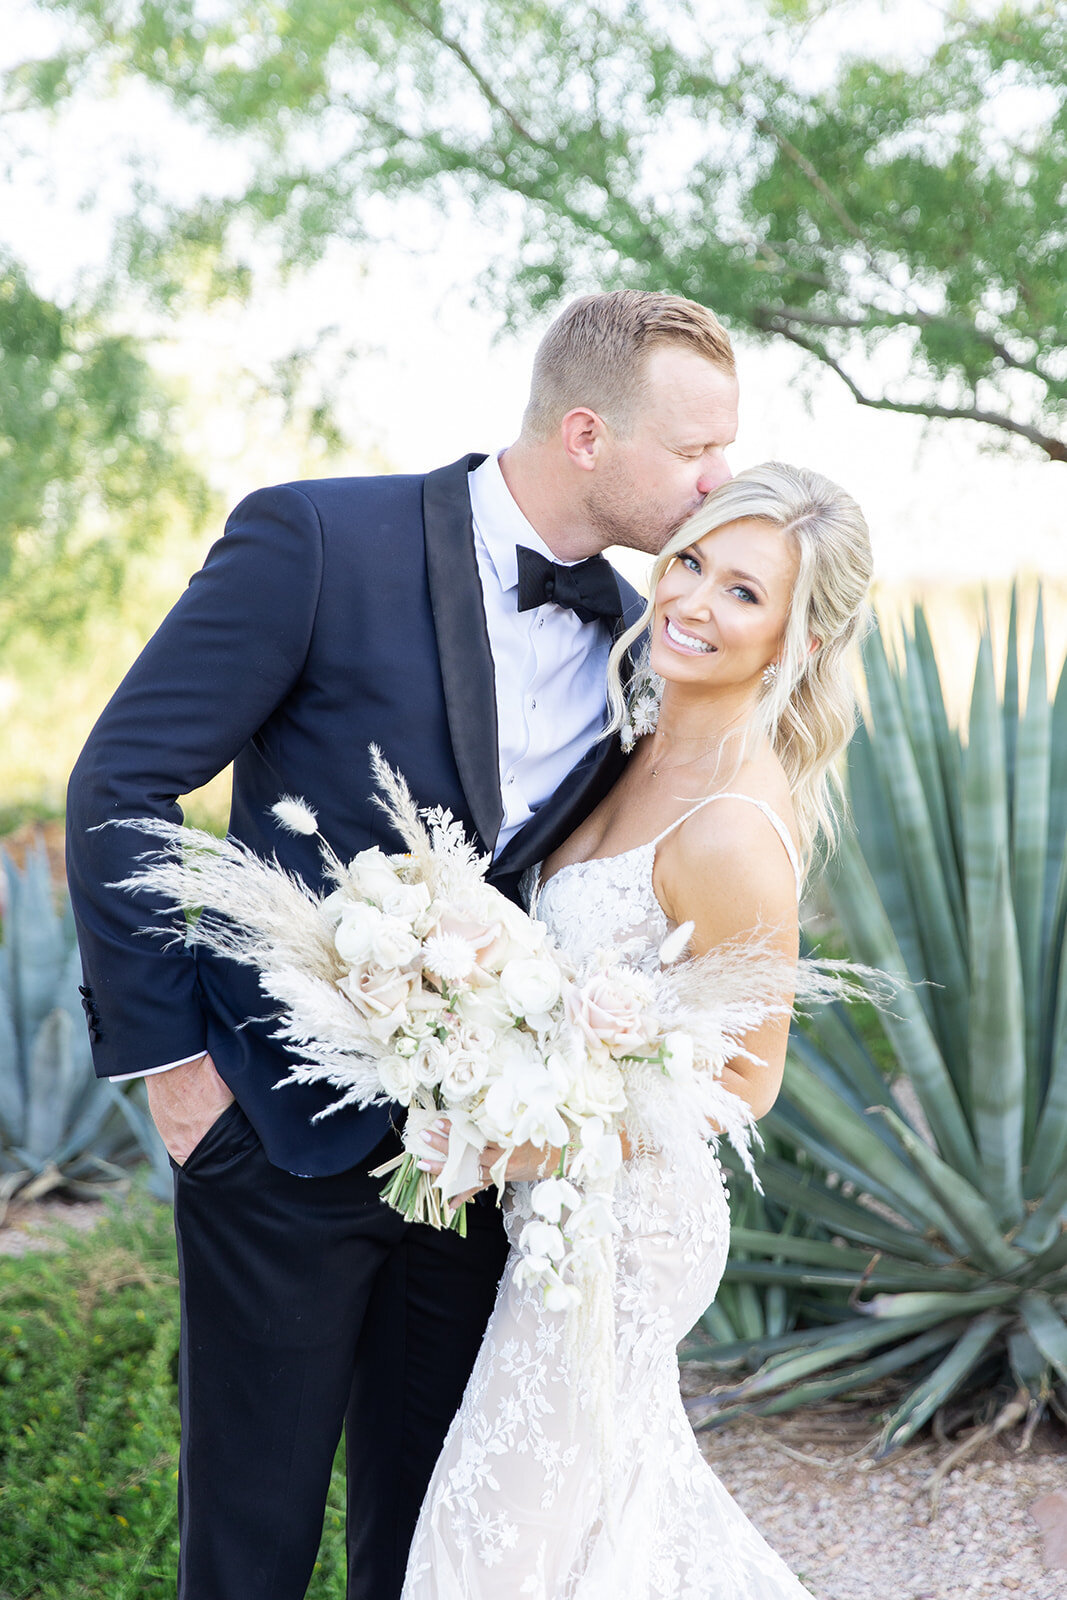 Karlie Colleen Photography - Ashley & Grant Wedding - The Paseo - Phoenix Arizona-685